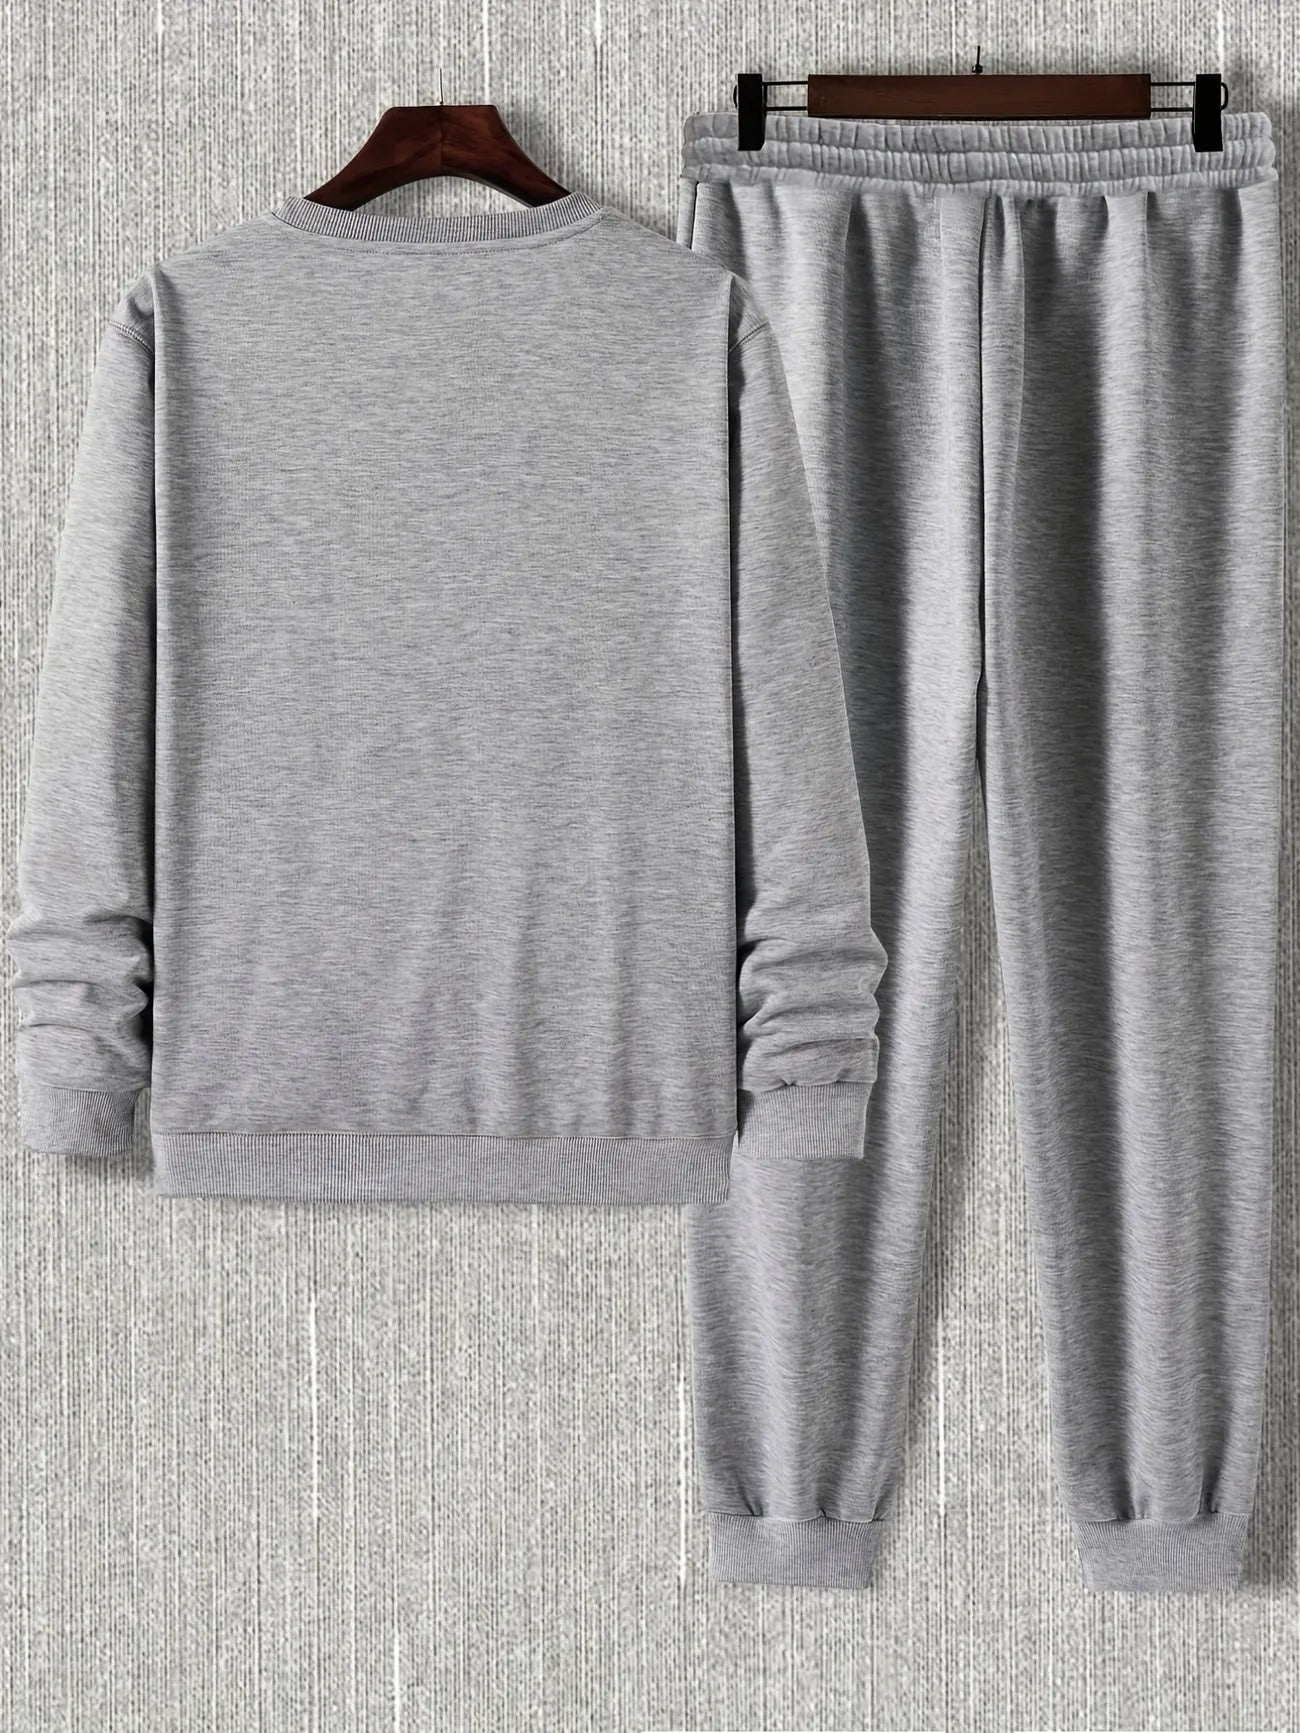 Mens Sweatshirt and Pants Set by Tee Tall - MSPSTT21 - Grey Grey